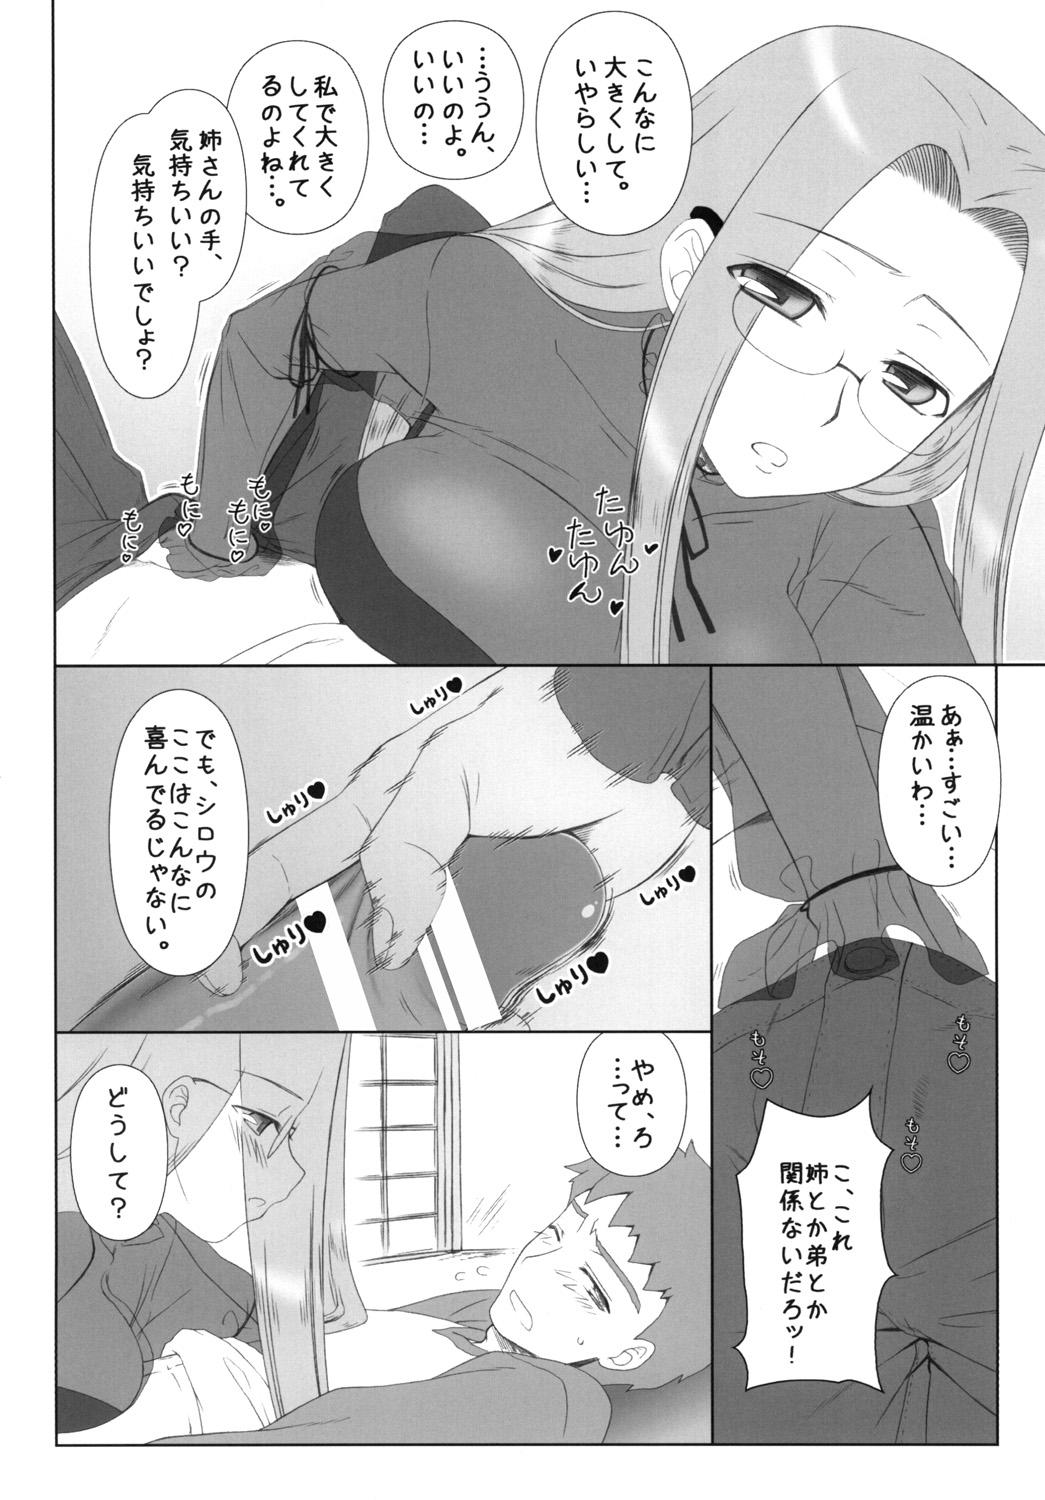 Chupada Yappari Rider wa Eroi na 8 "Rider, Oneechan ni naru" - Fate stay night Publico - Page 5